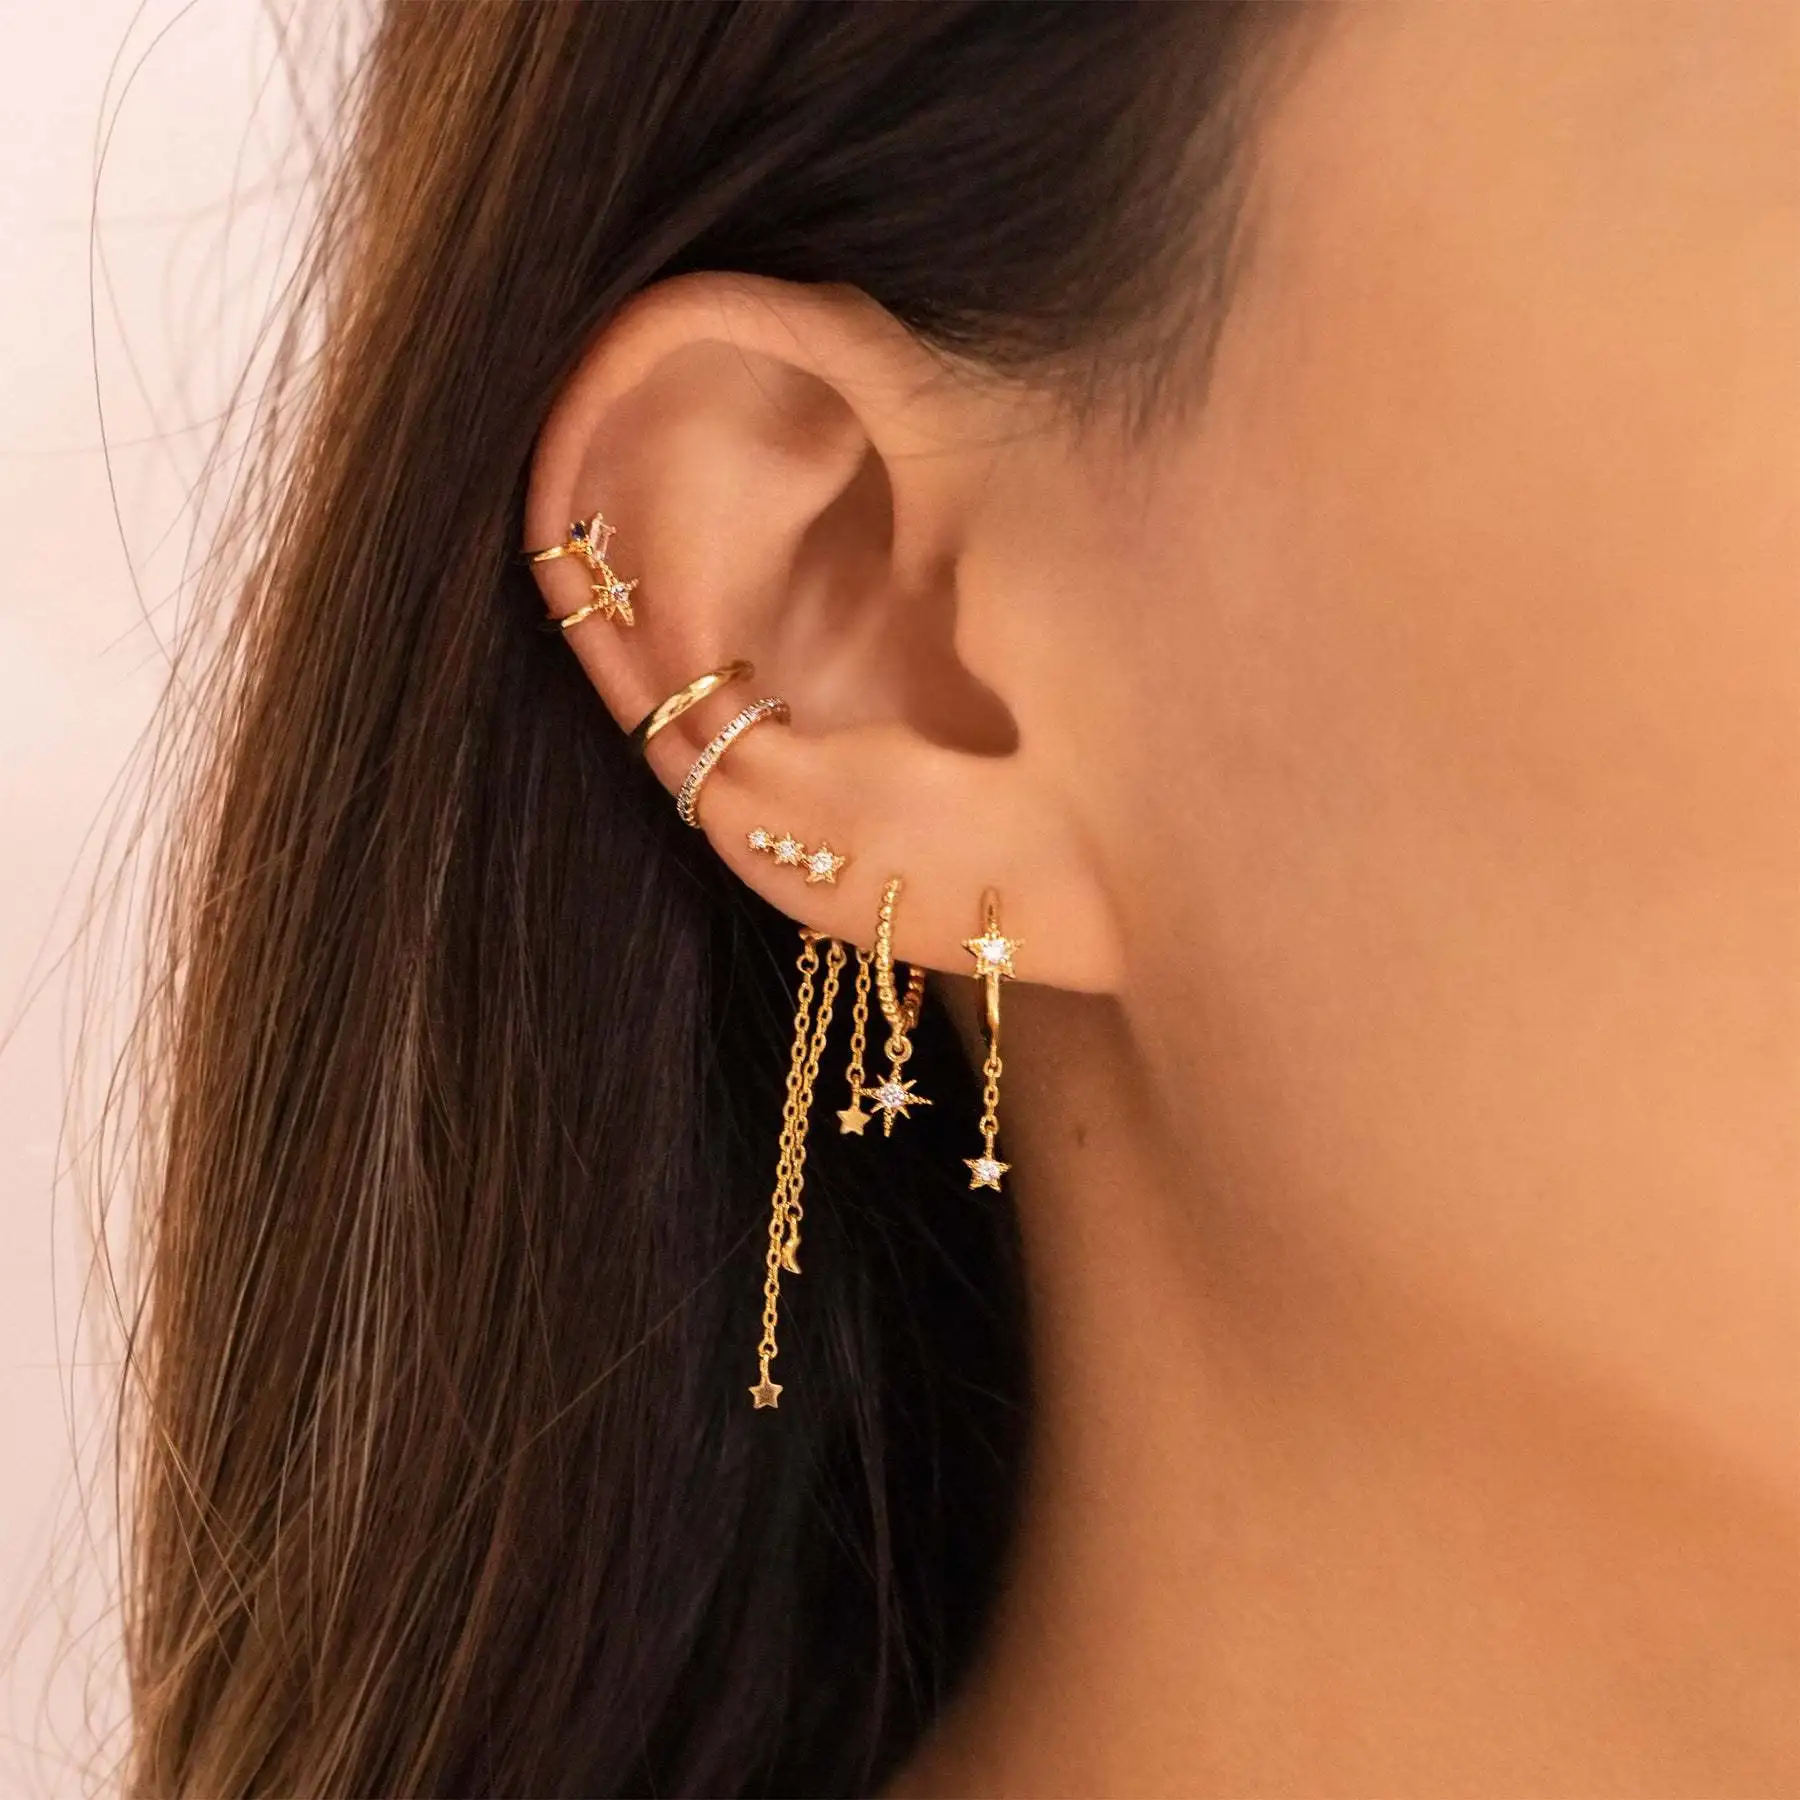 New Stainless Steel Cubic Zirconia Hoop Earring For Women Small Cloud Star Moon Chain Pendant Cartilage Earring Piercing Jewelry